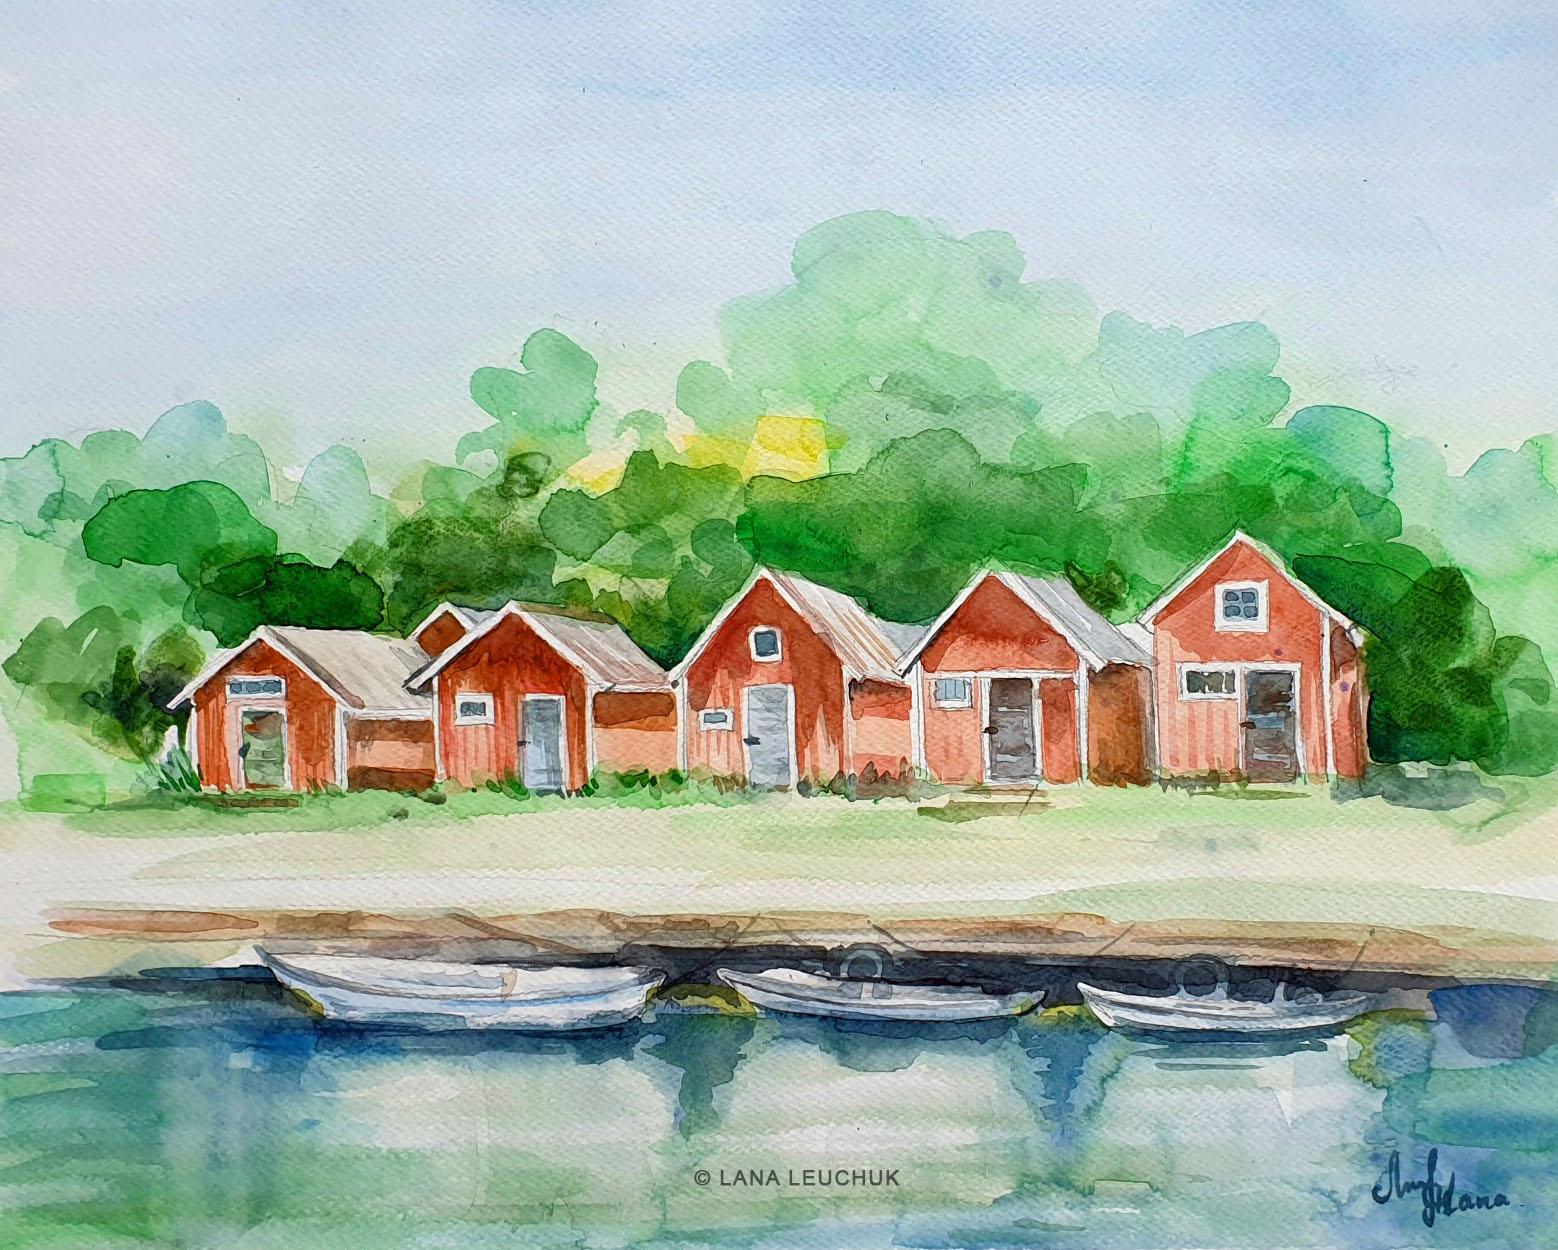 Lana-Leuchuk-Summer in Torhamn-watercolor-2021-W